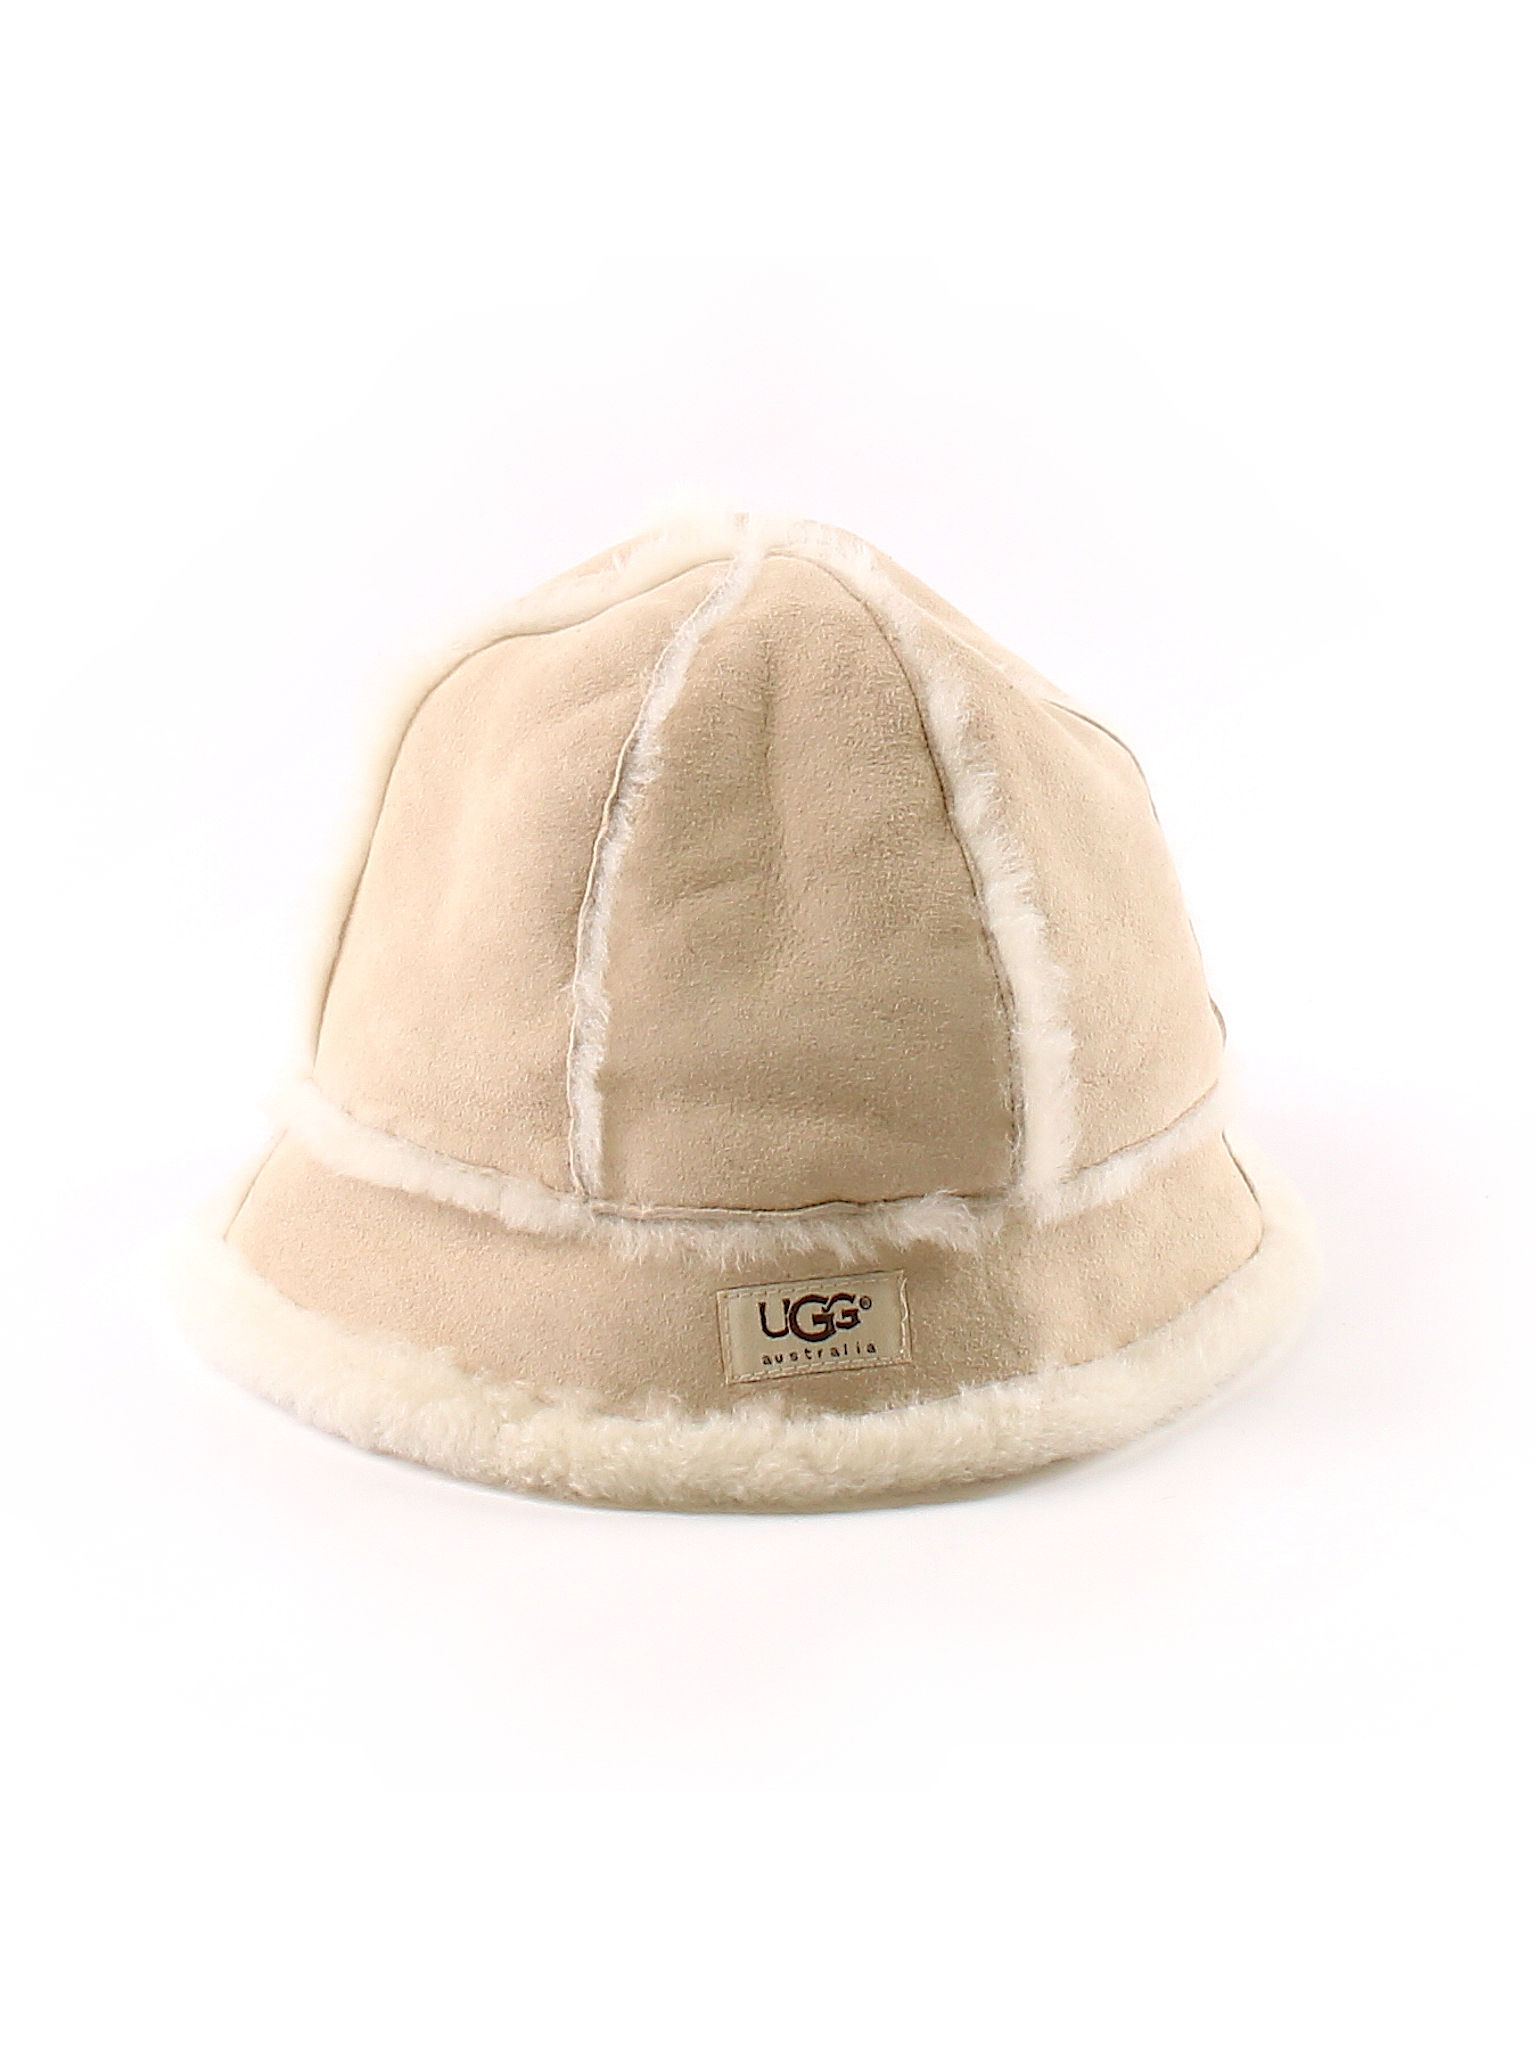 uggs winter hat